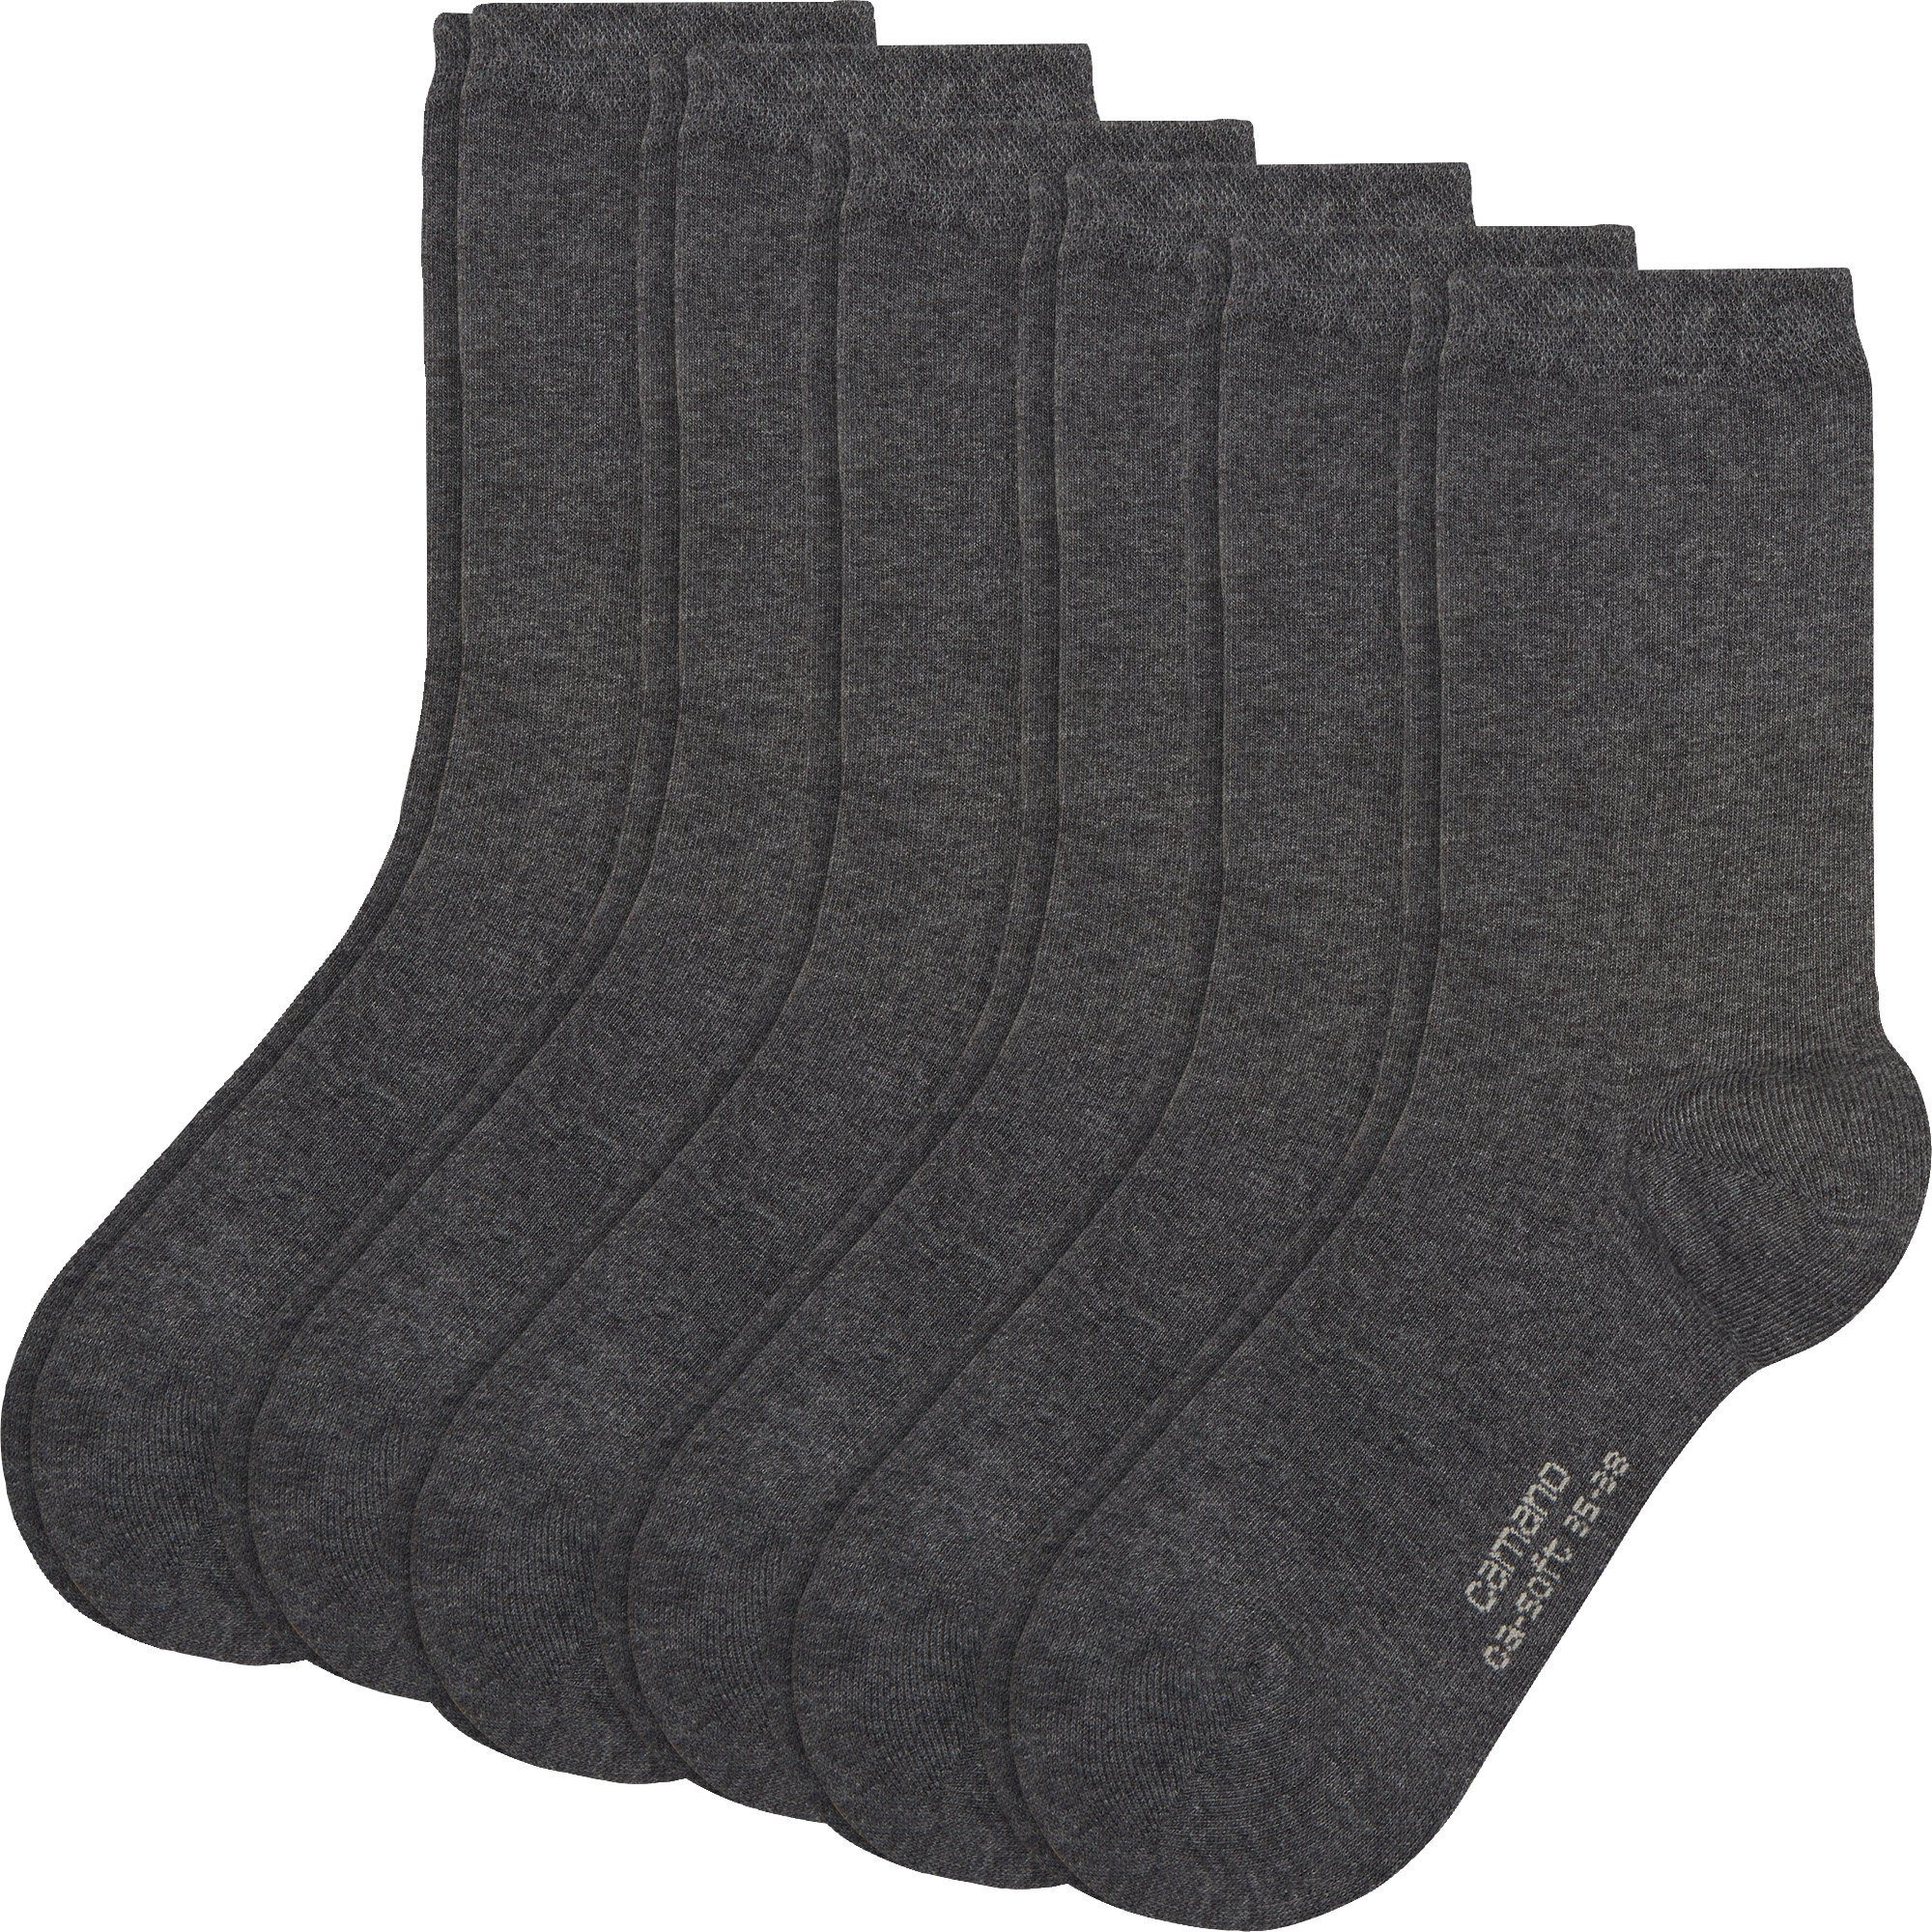 Socken Uni Paar Damen-Socken Camano anthrazit-melange 6